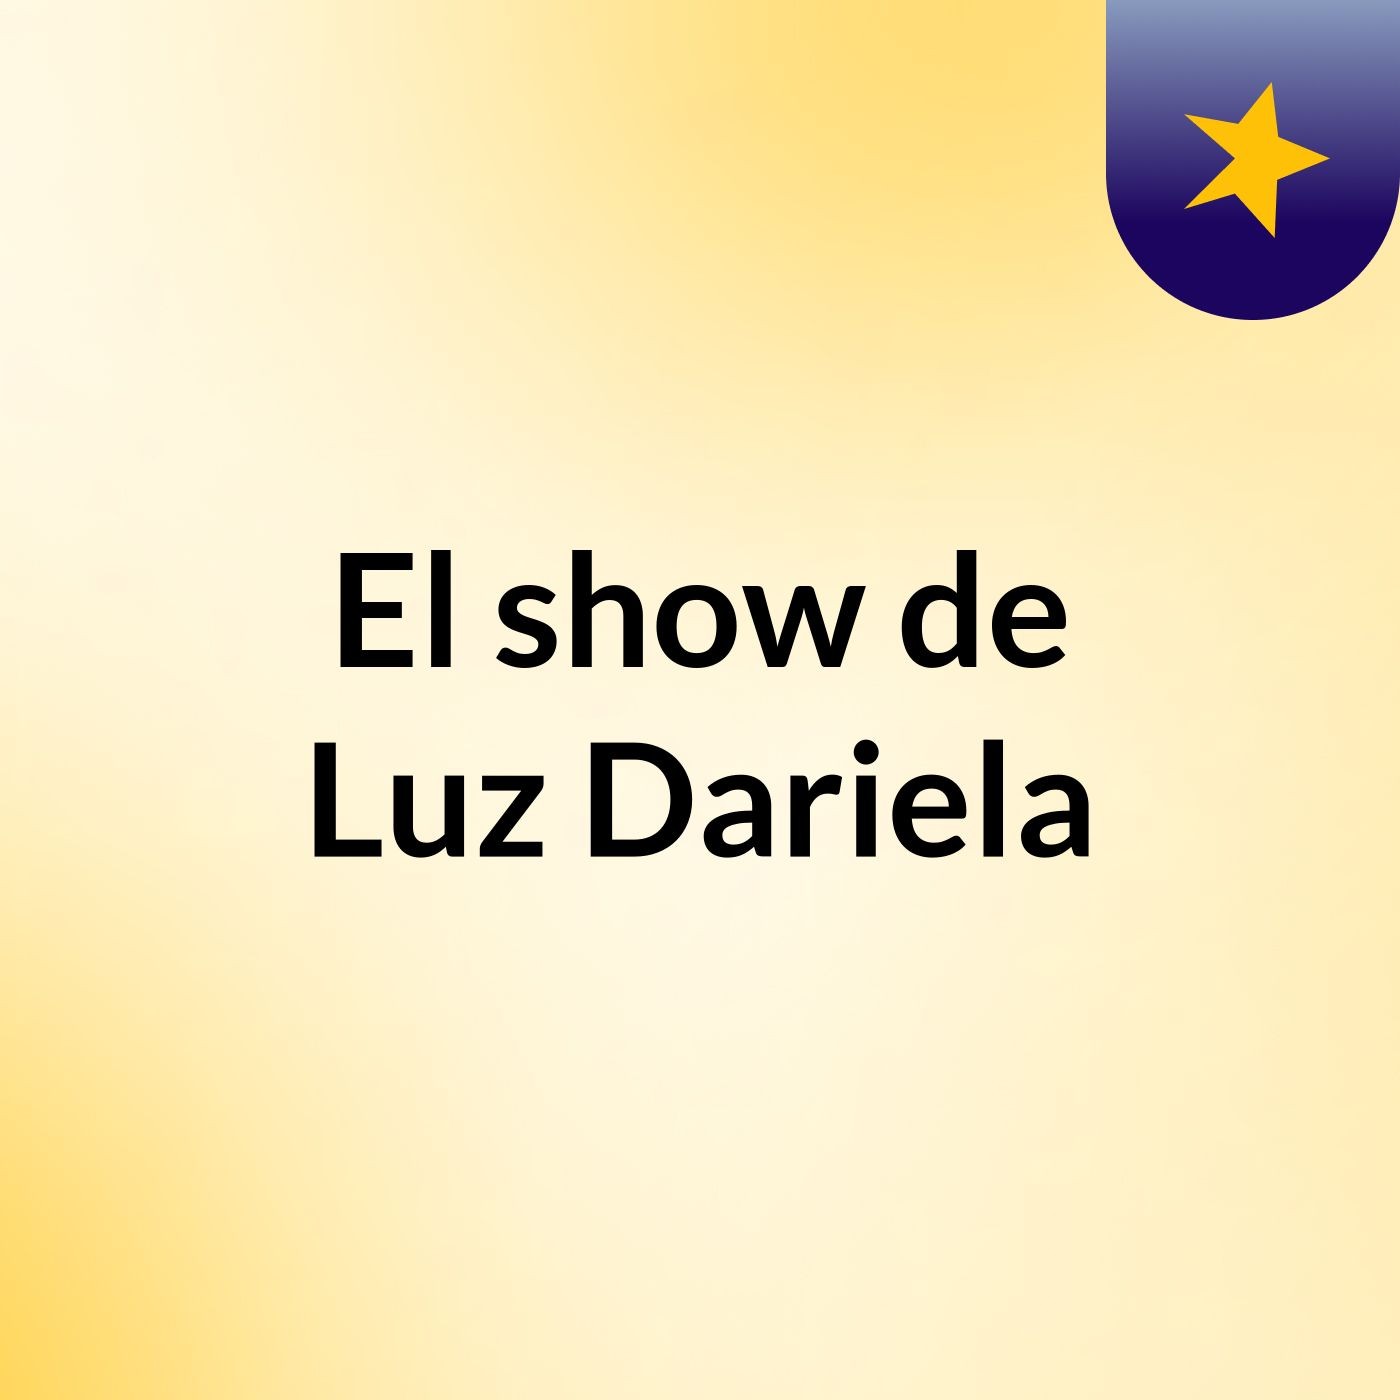 El show de Luz Dariela